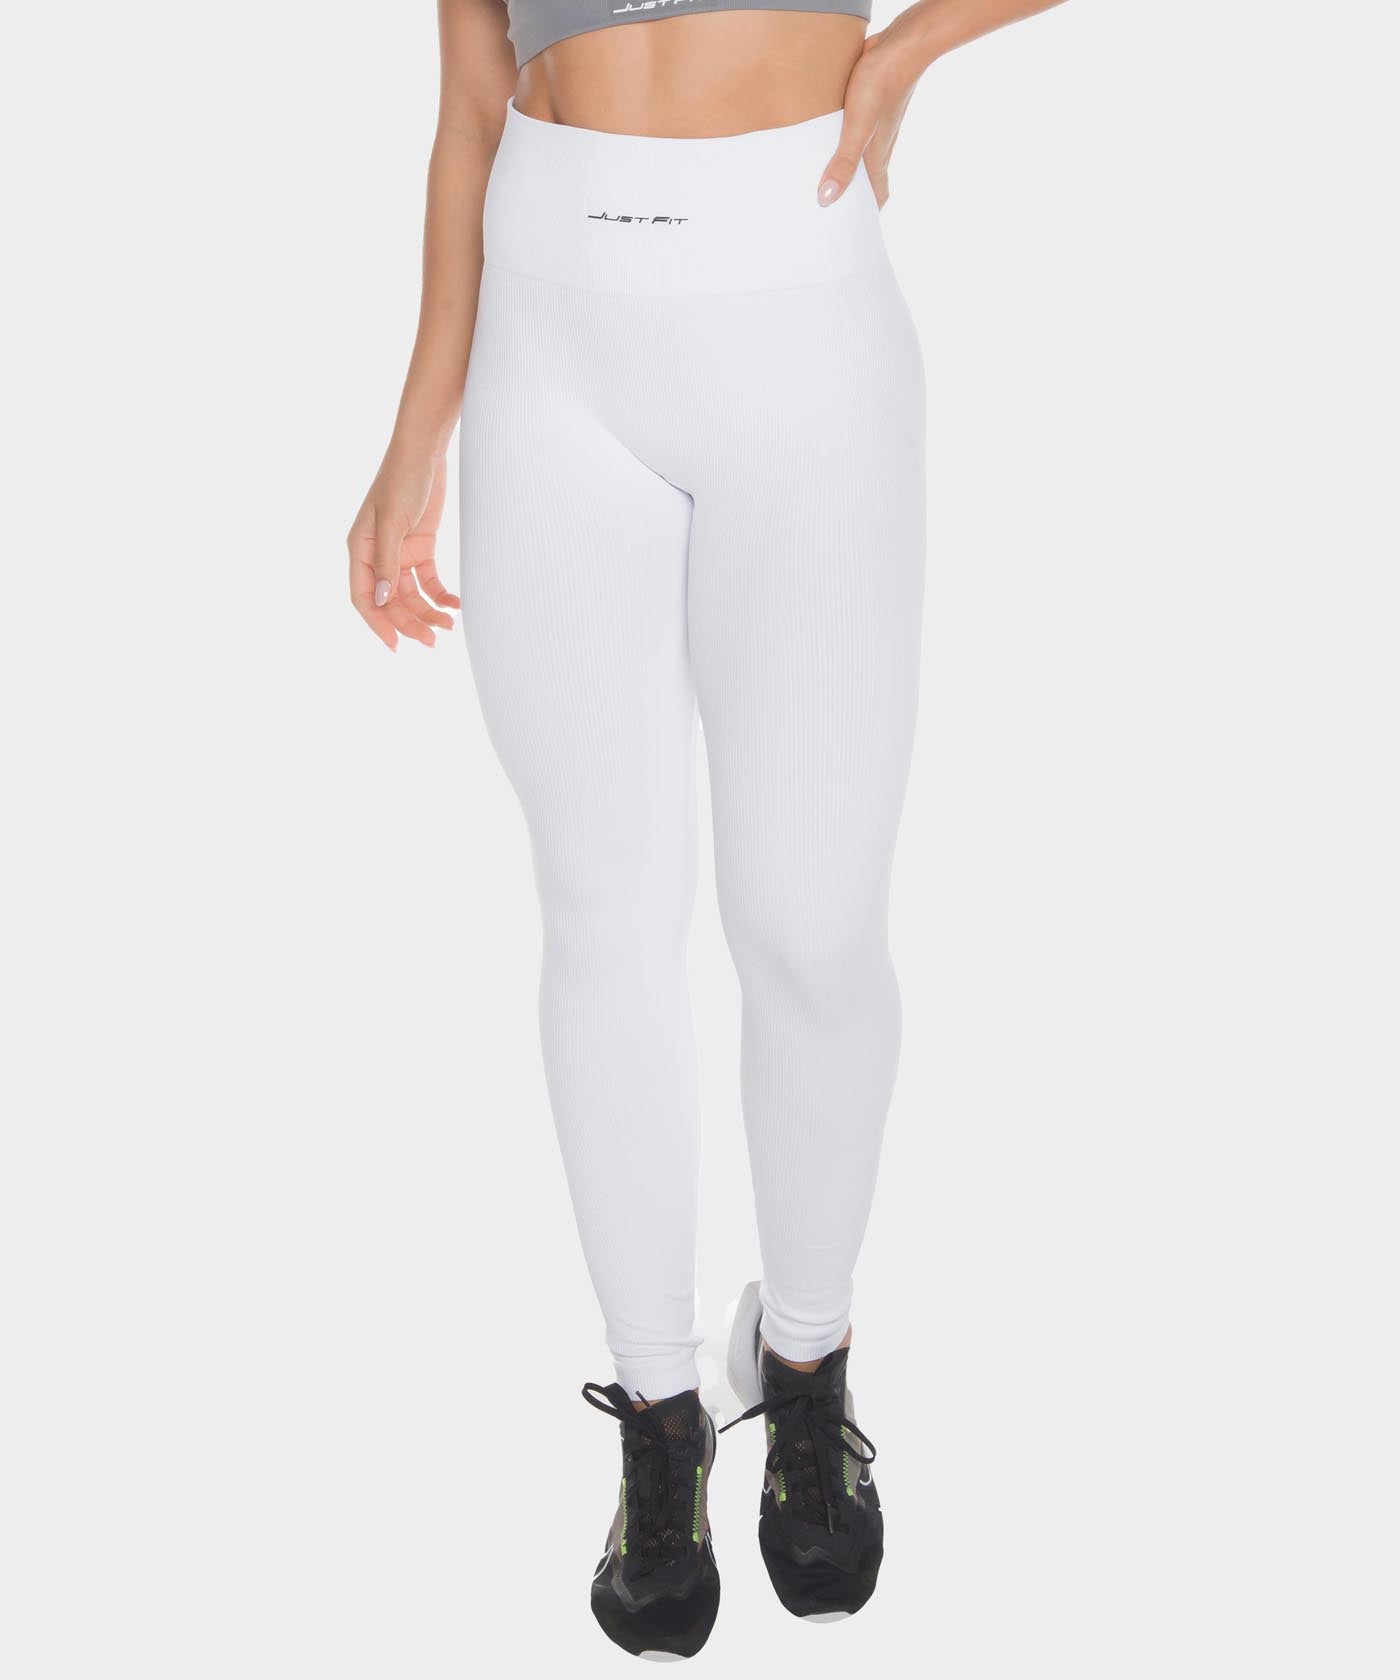 FITUSA™-Premium Women's High Rise Tie Dye Leggings Yoga Pants (NY10C25-White)  – FITUSA